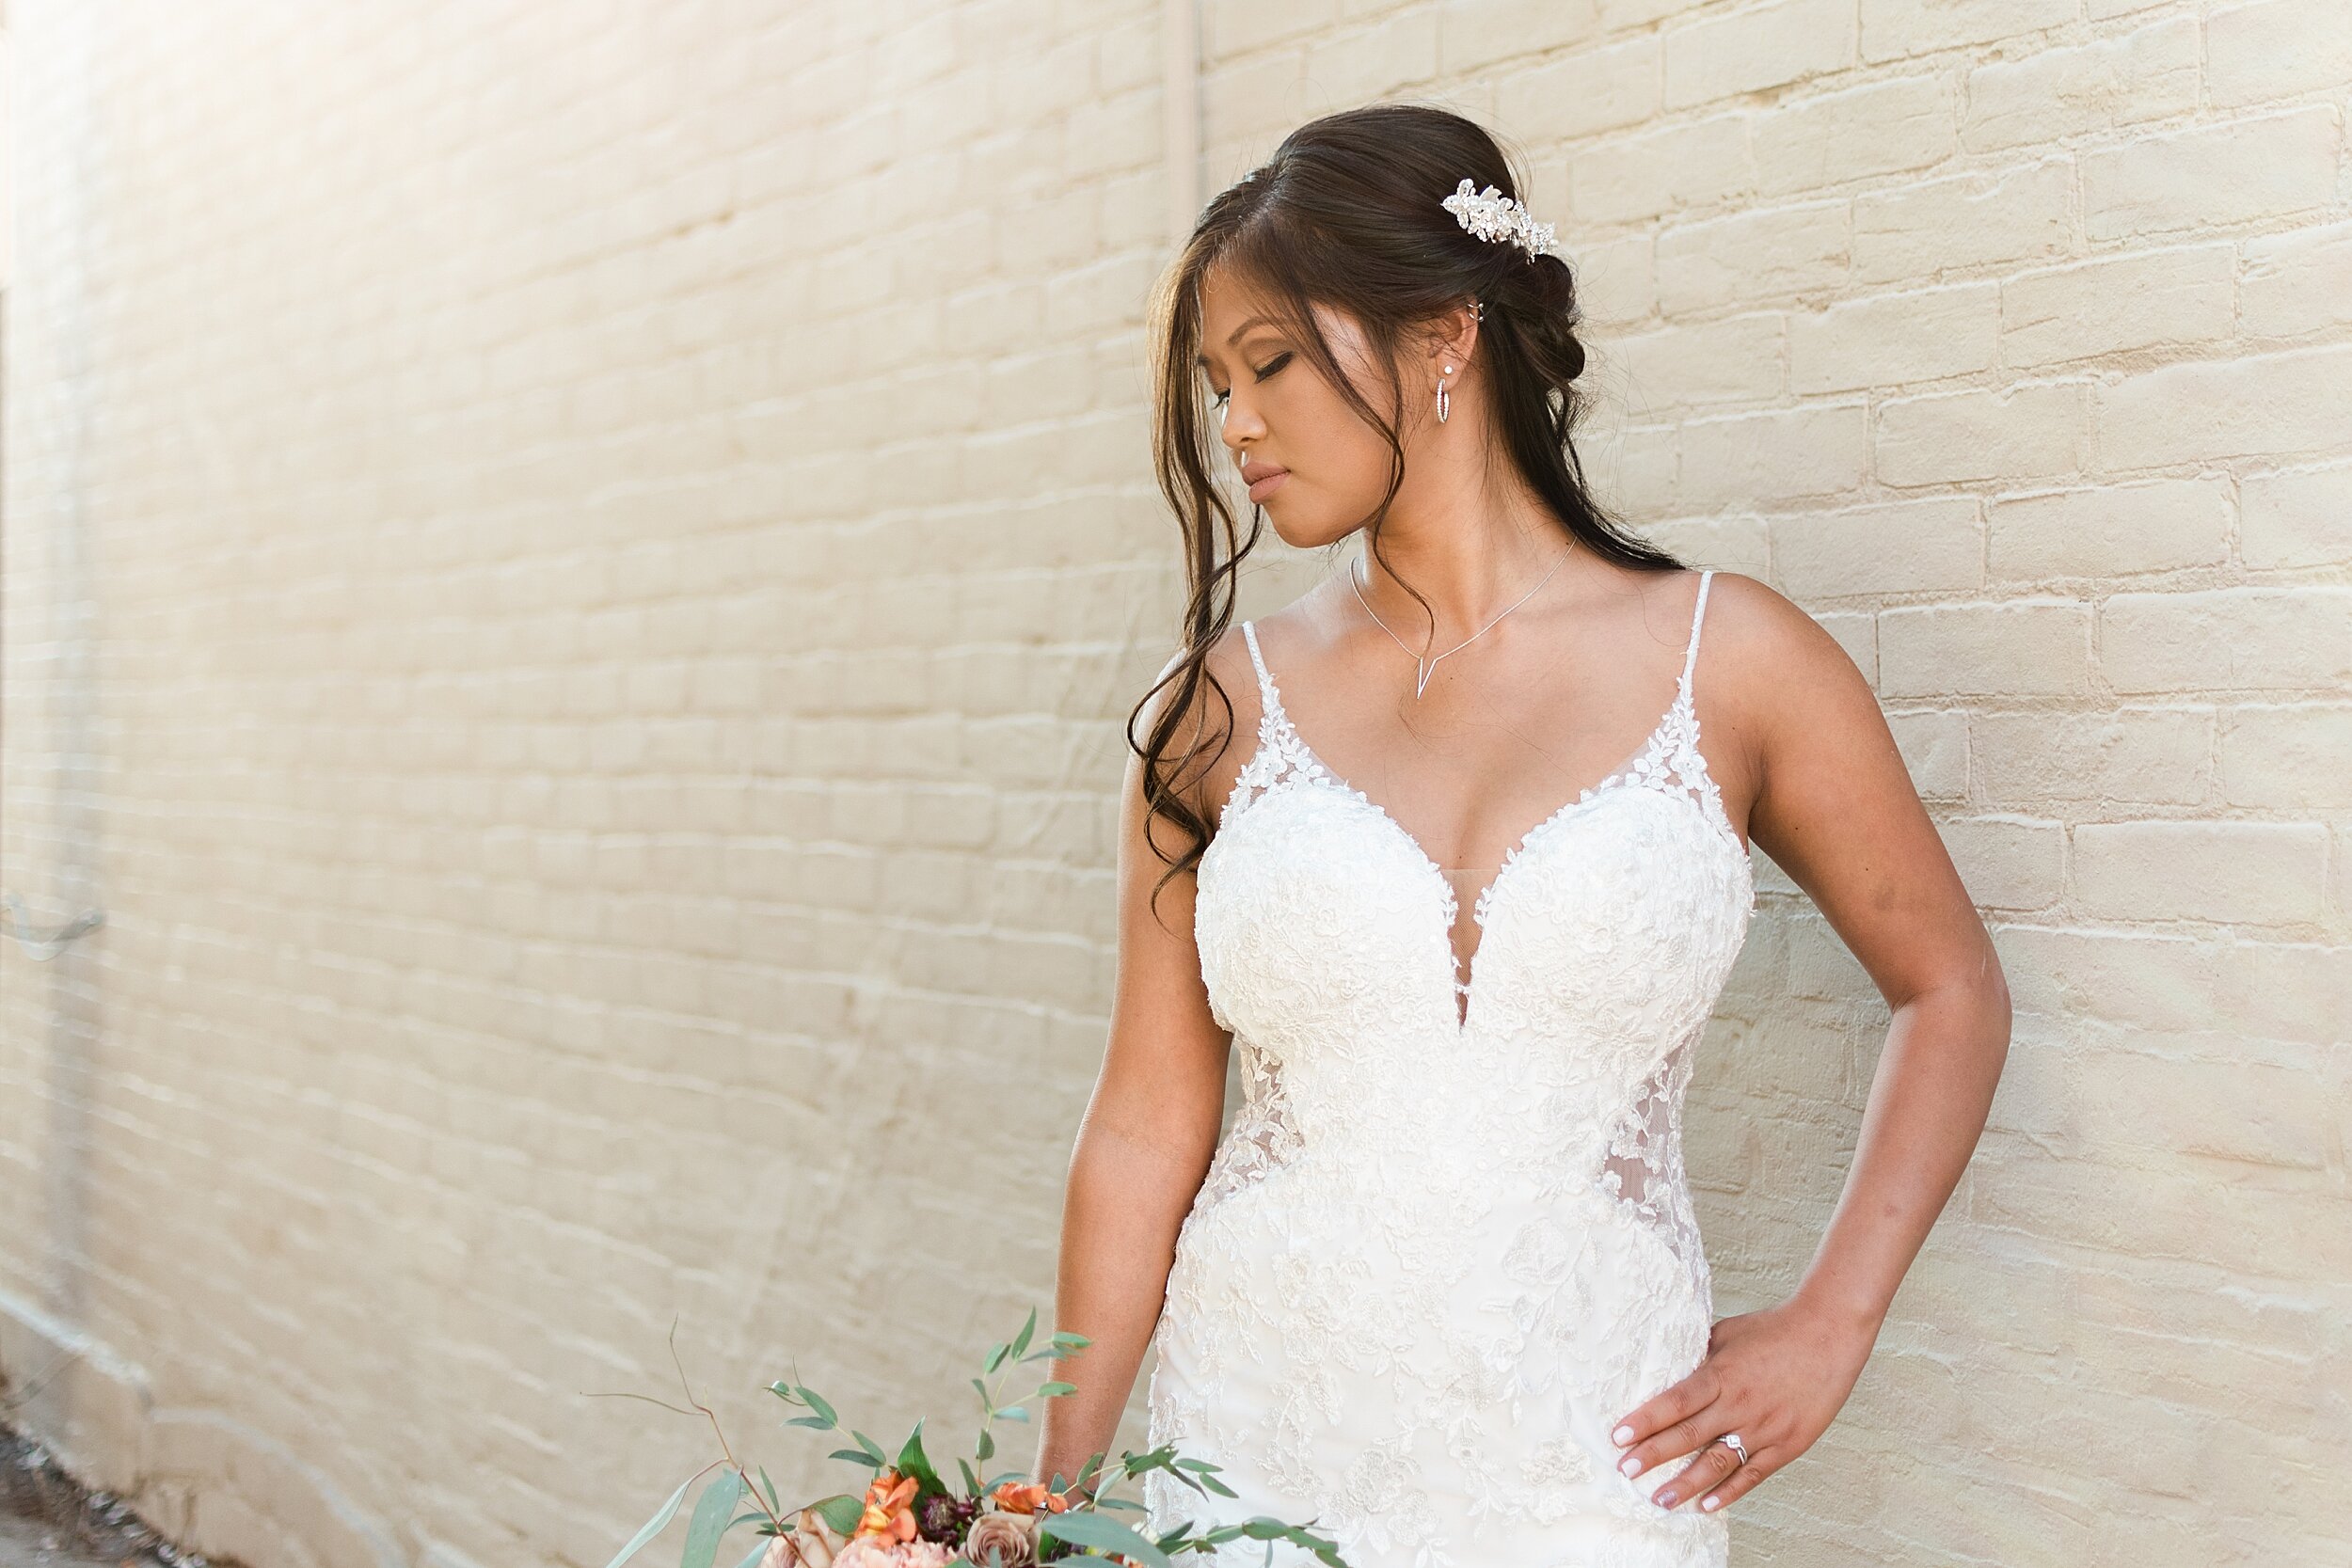 sisters-bridal-boutique-laudicks-jewelry-betsys-bouquets-van-wert-ohio-wedding-photographer-the-association-photography_6908.jpg